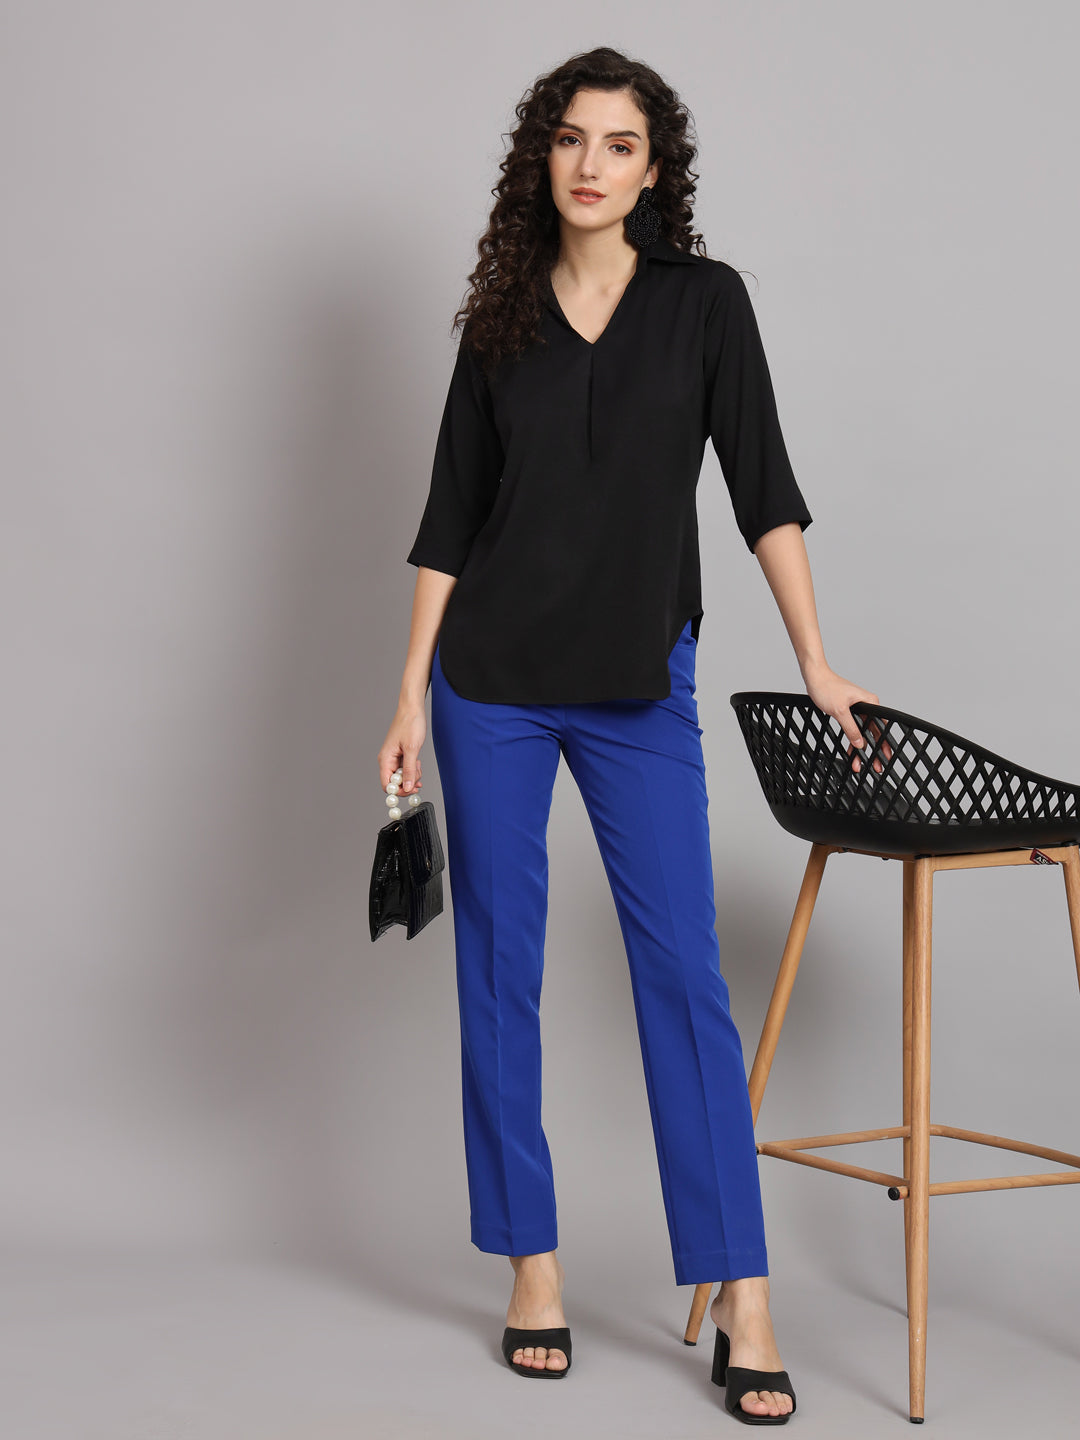 Black Box Pleat Shirt with Blue Comfort Trouser